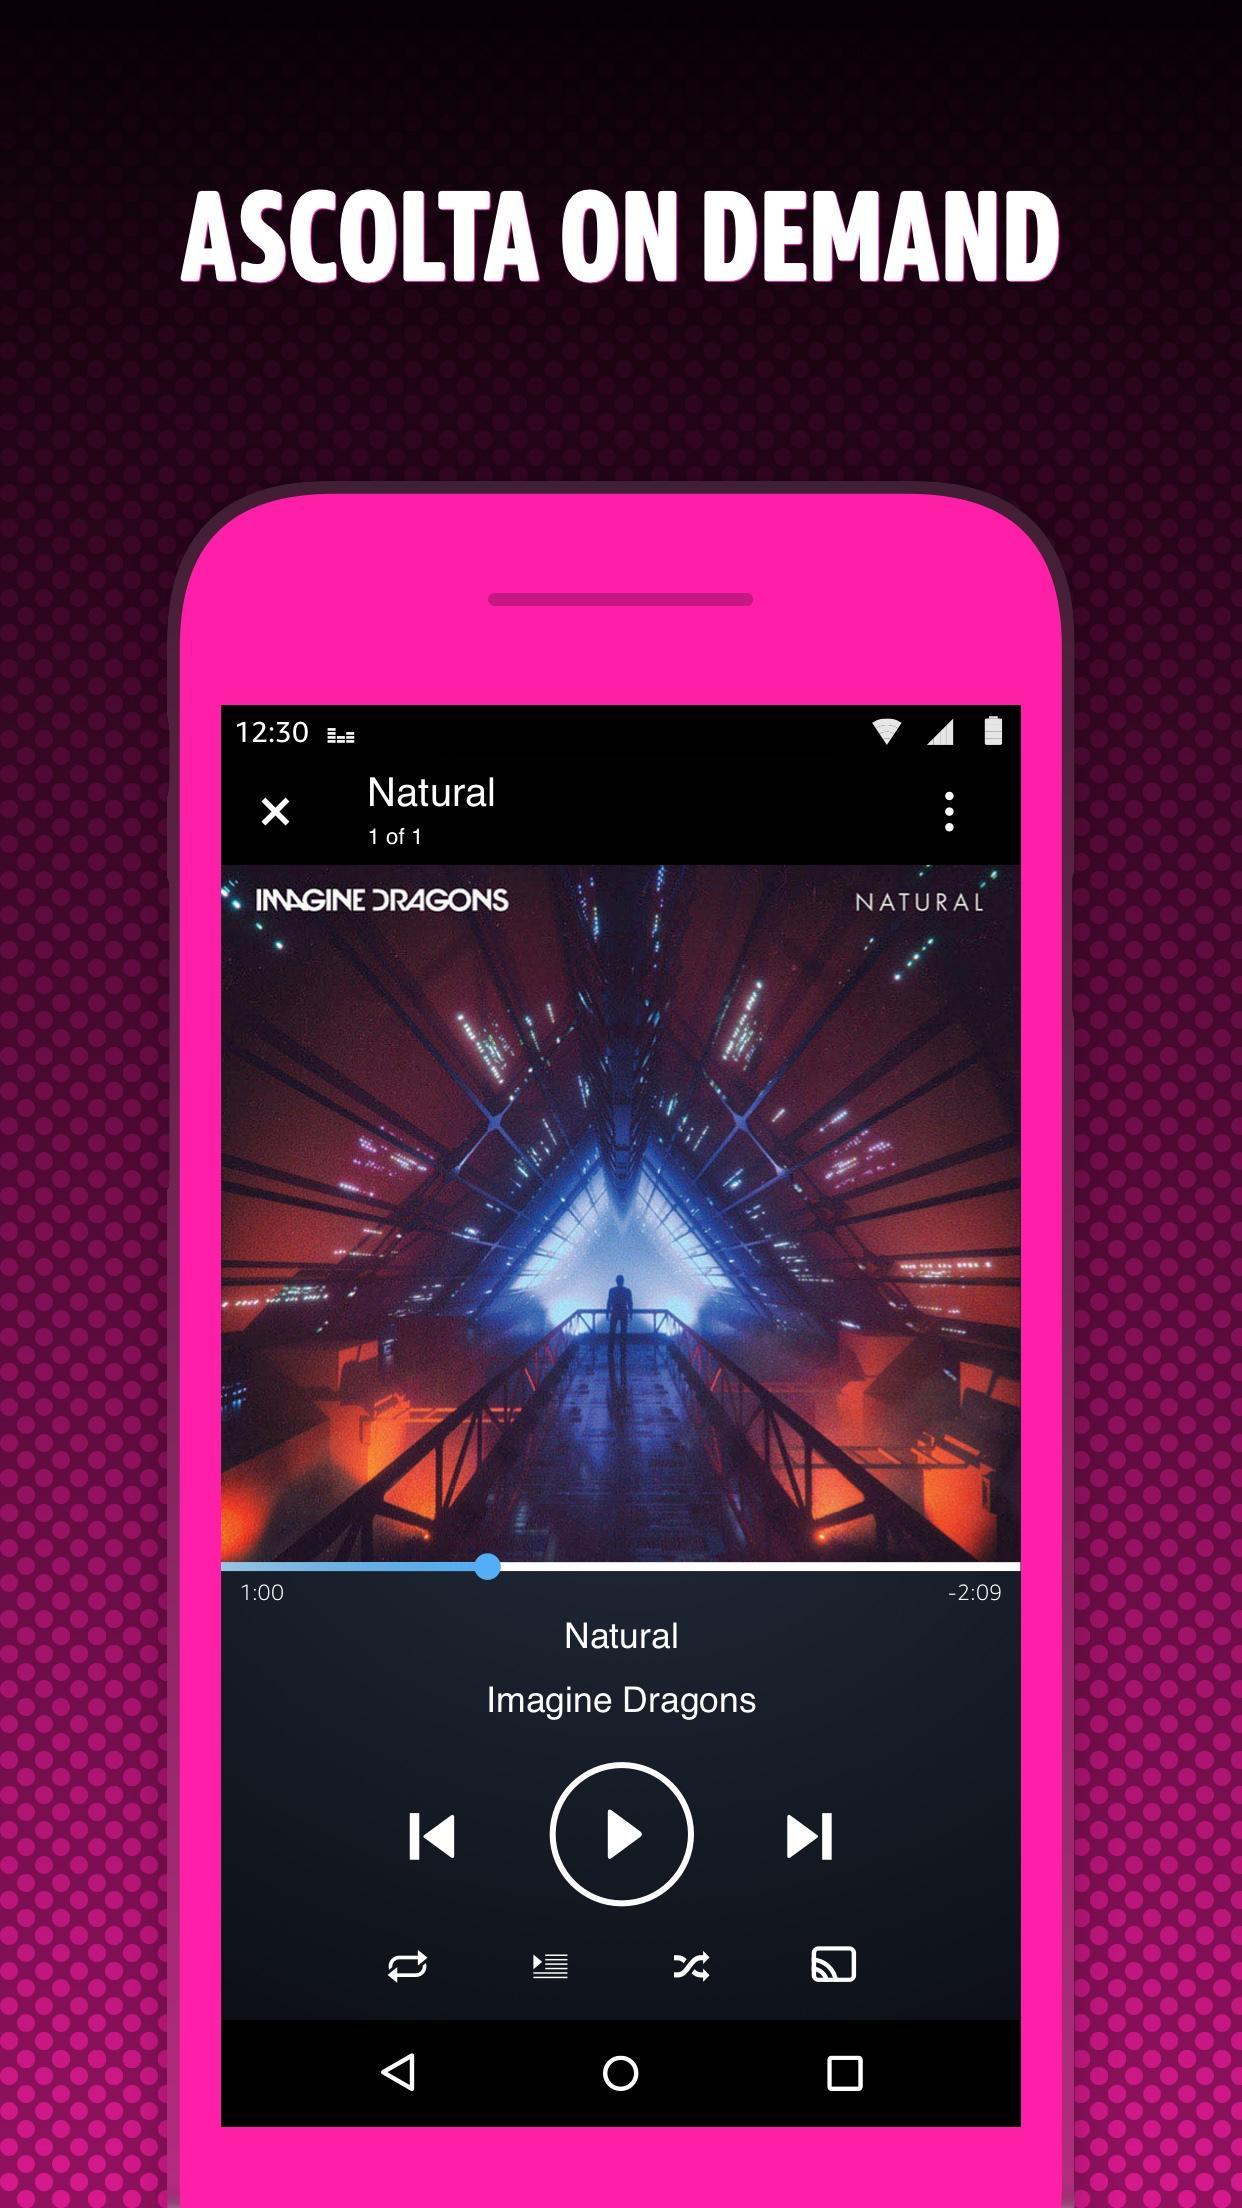 Amazon Music Player. Amazon Music mobile app. Амазон музыка приложение. Фото Plays any Song музыкальный аппарат. Natural imagine на русском